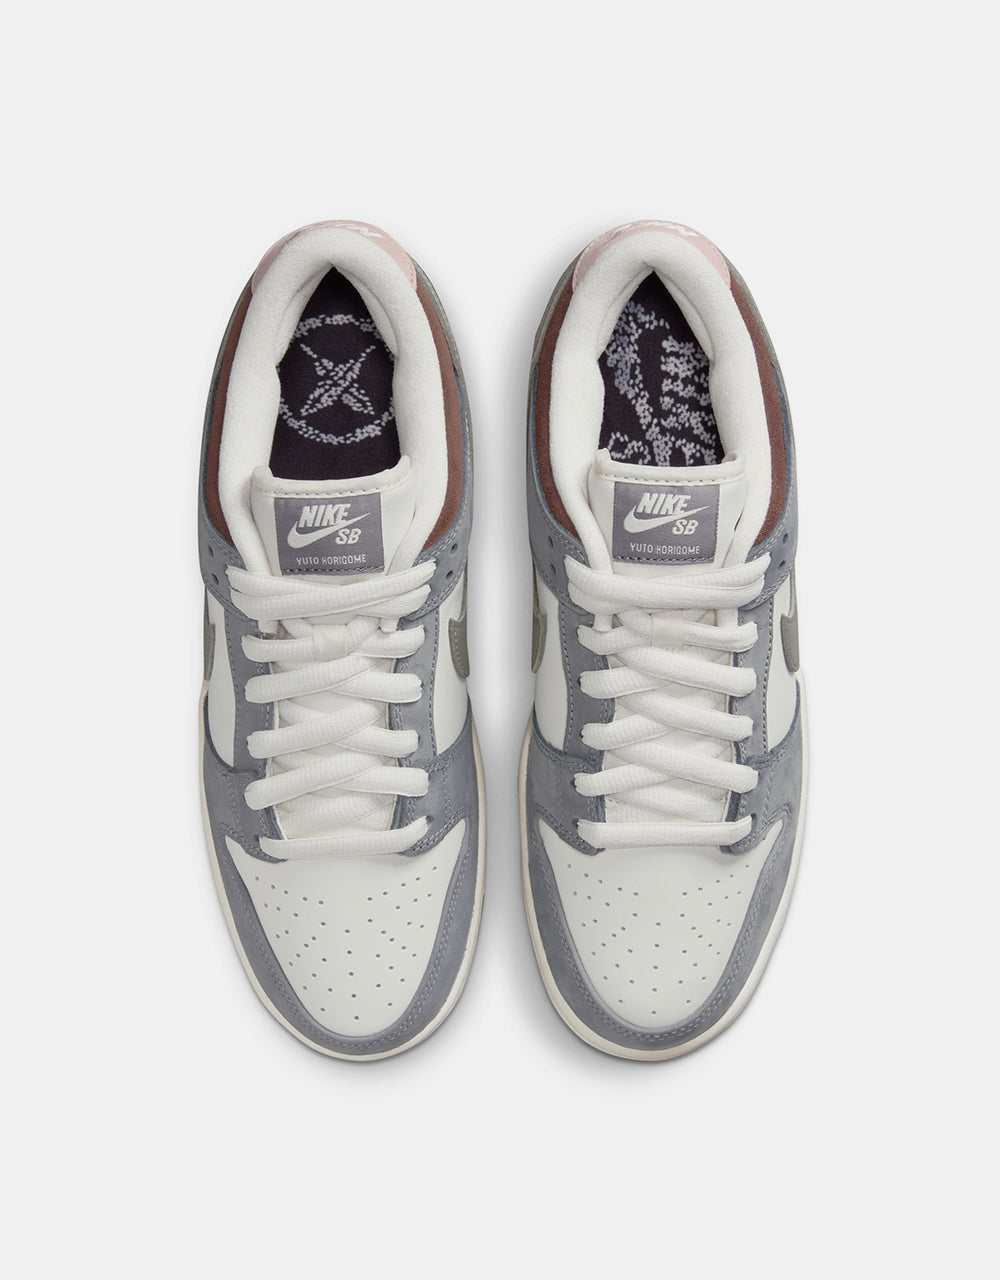 Nike SB 'Yuto' Dunk Low Pro QS Skate Shoes - Wolf Grey/Iron Grey-Sail